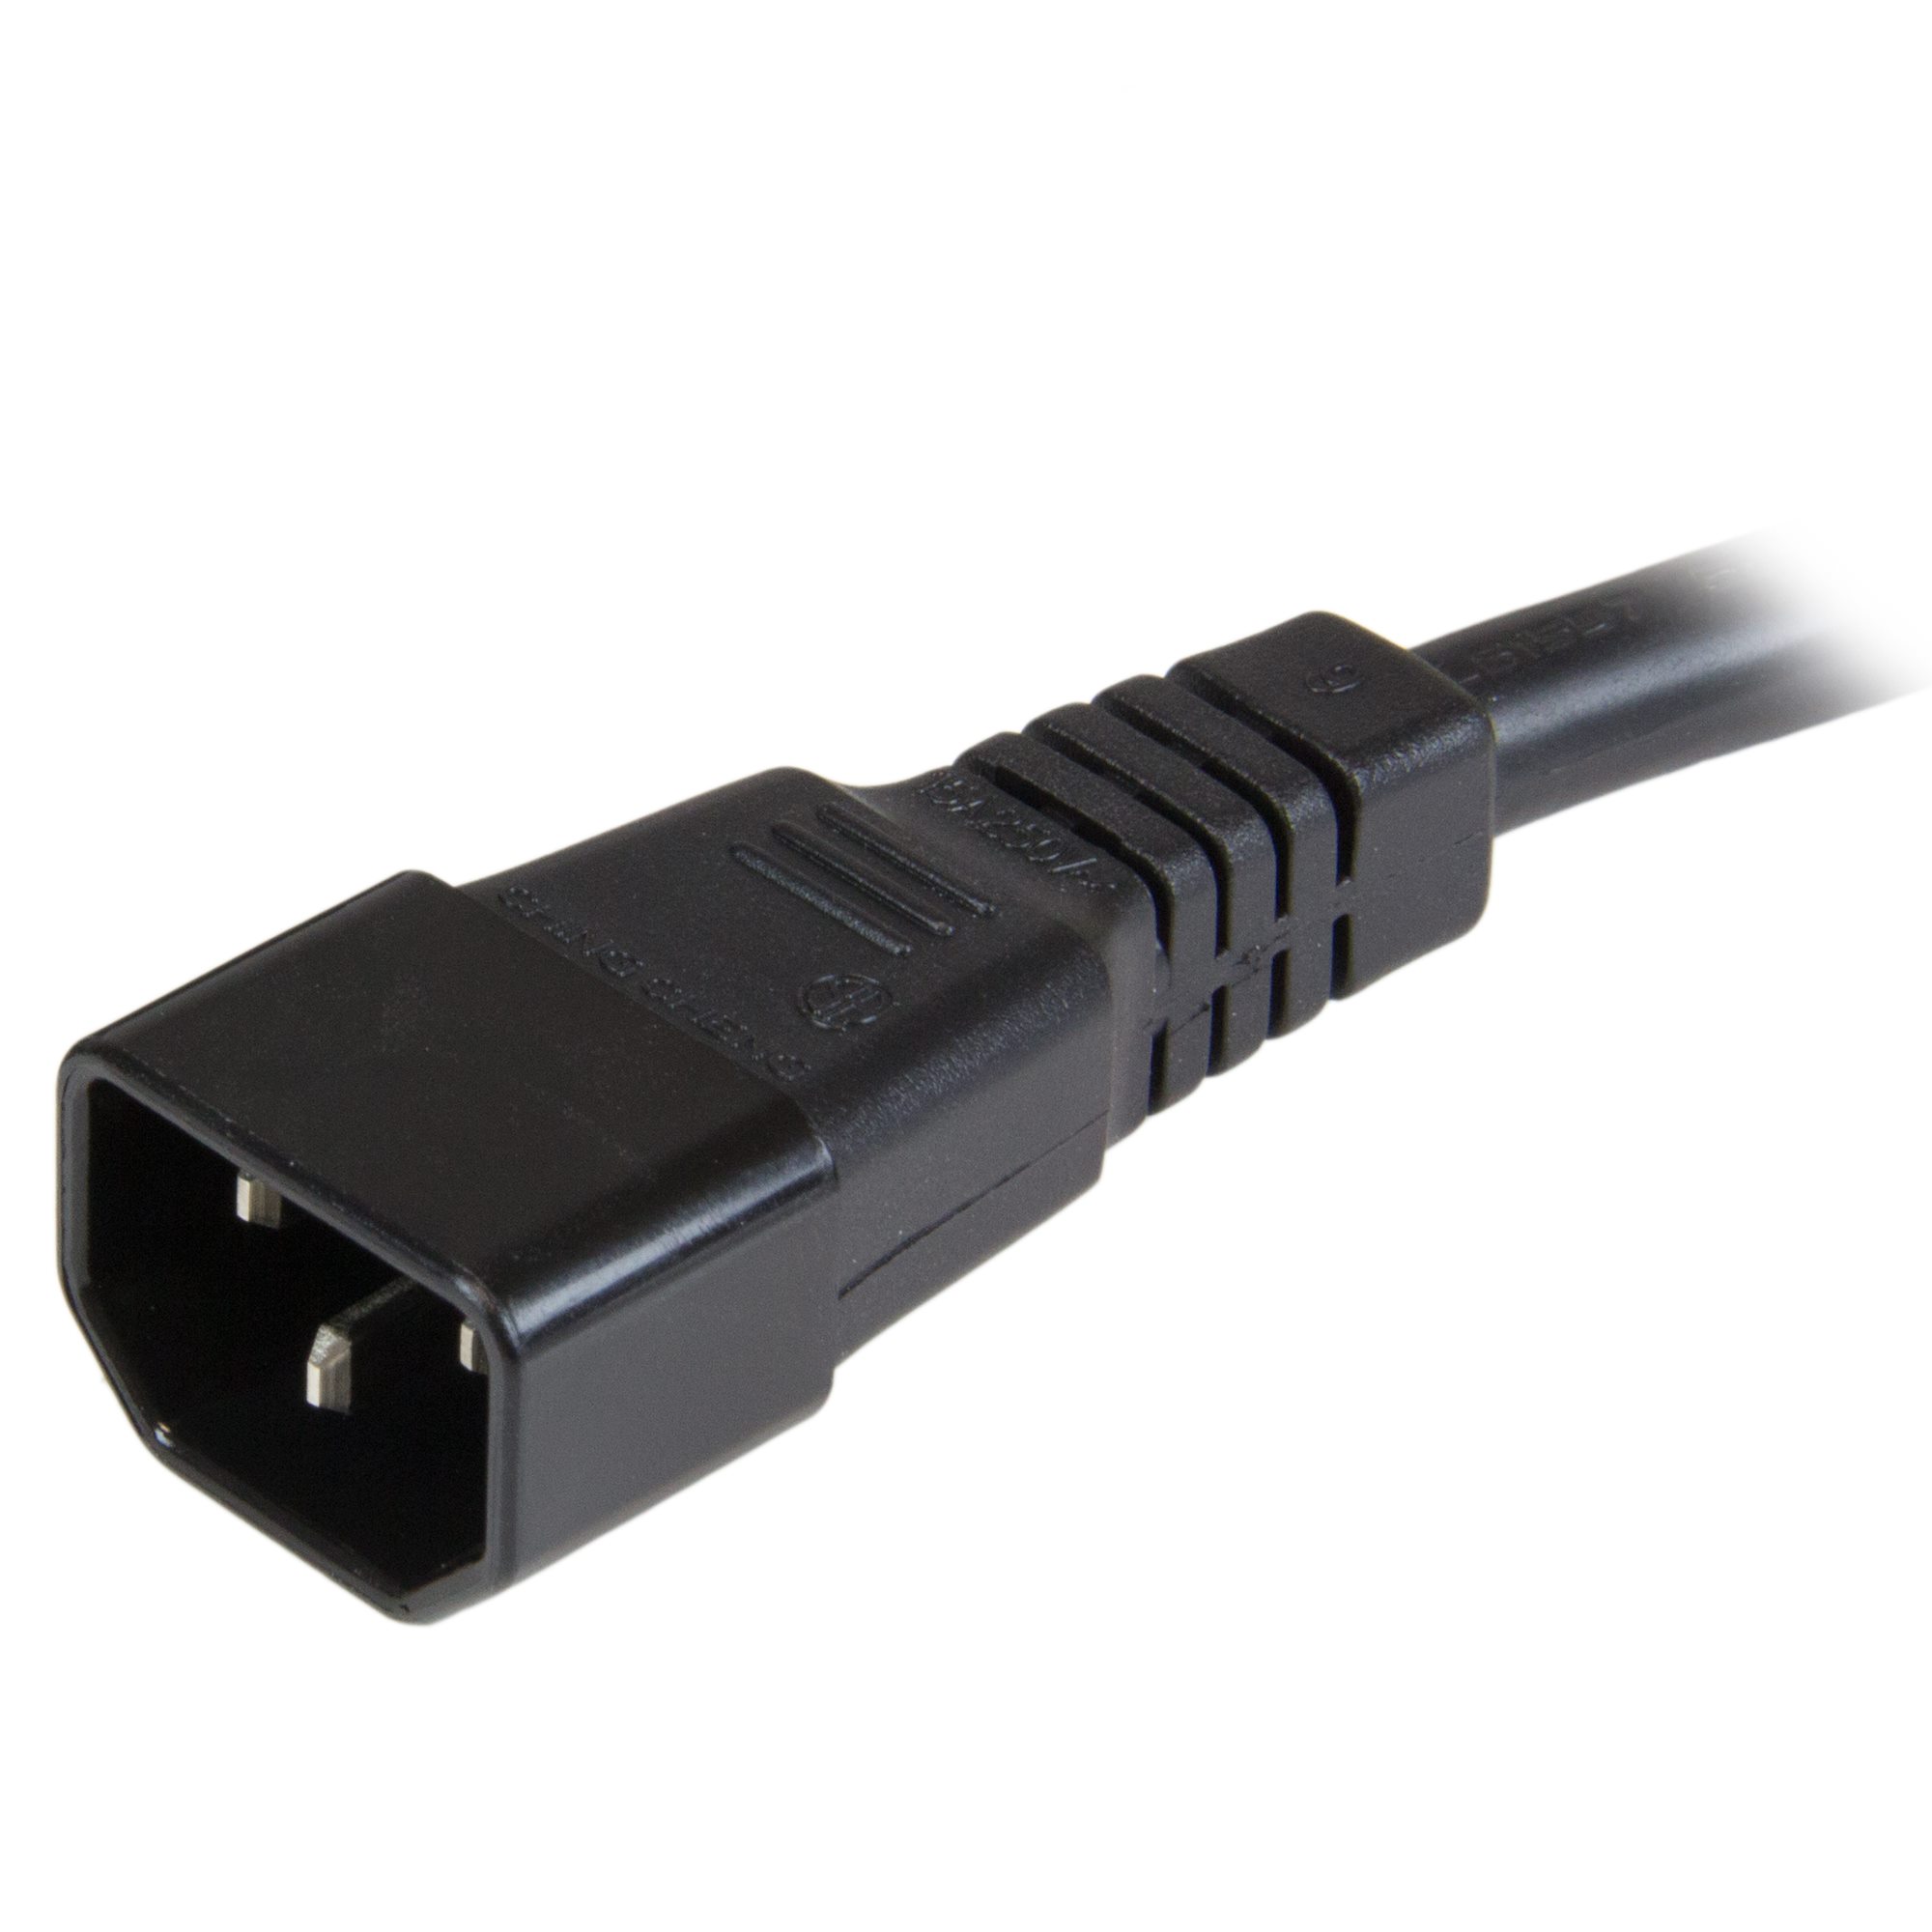 Cable alimentación IEC C14 - IEC C15 - Cables multimedia - CTI Electrónica